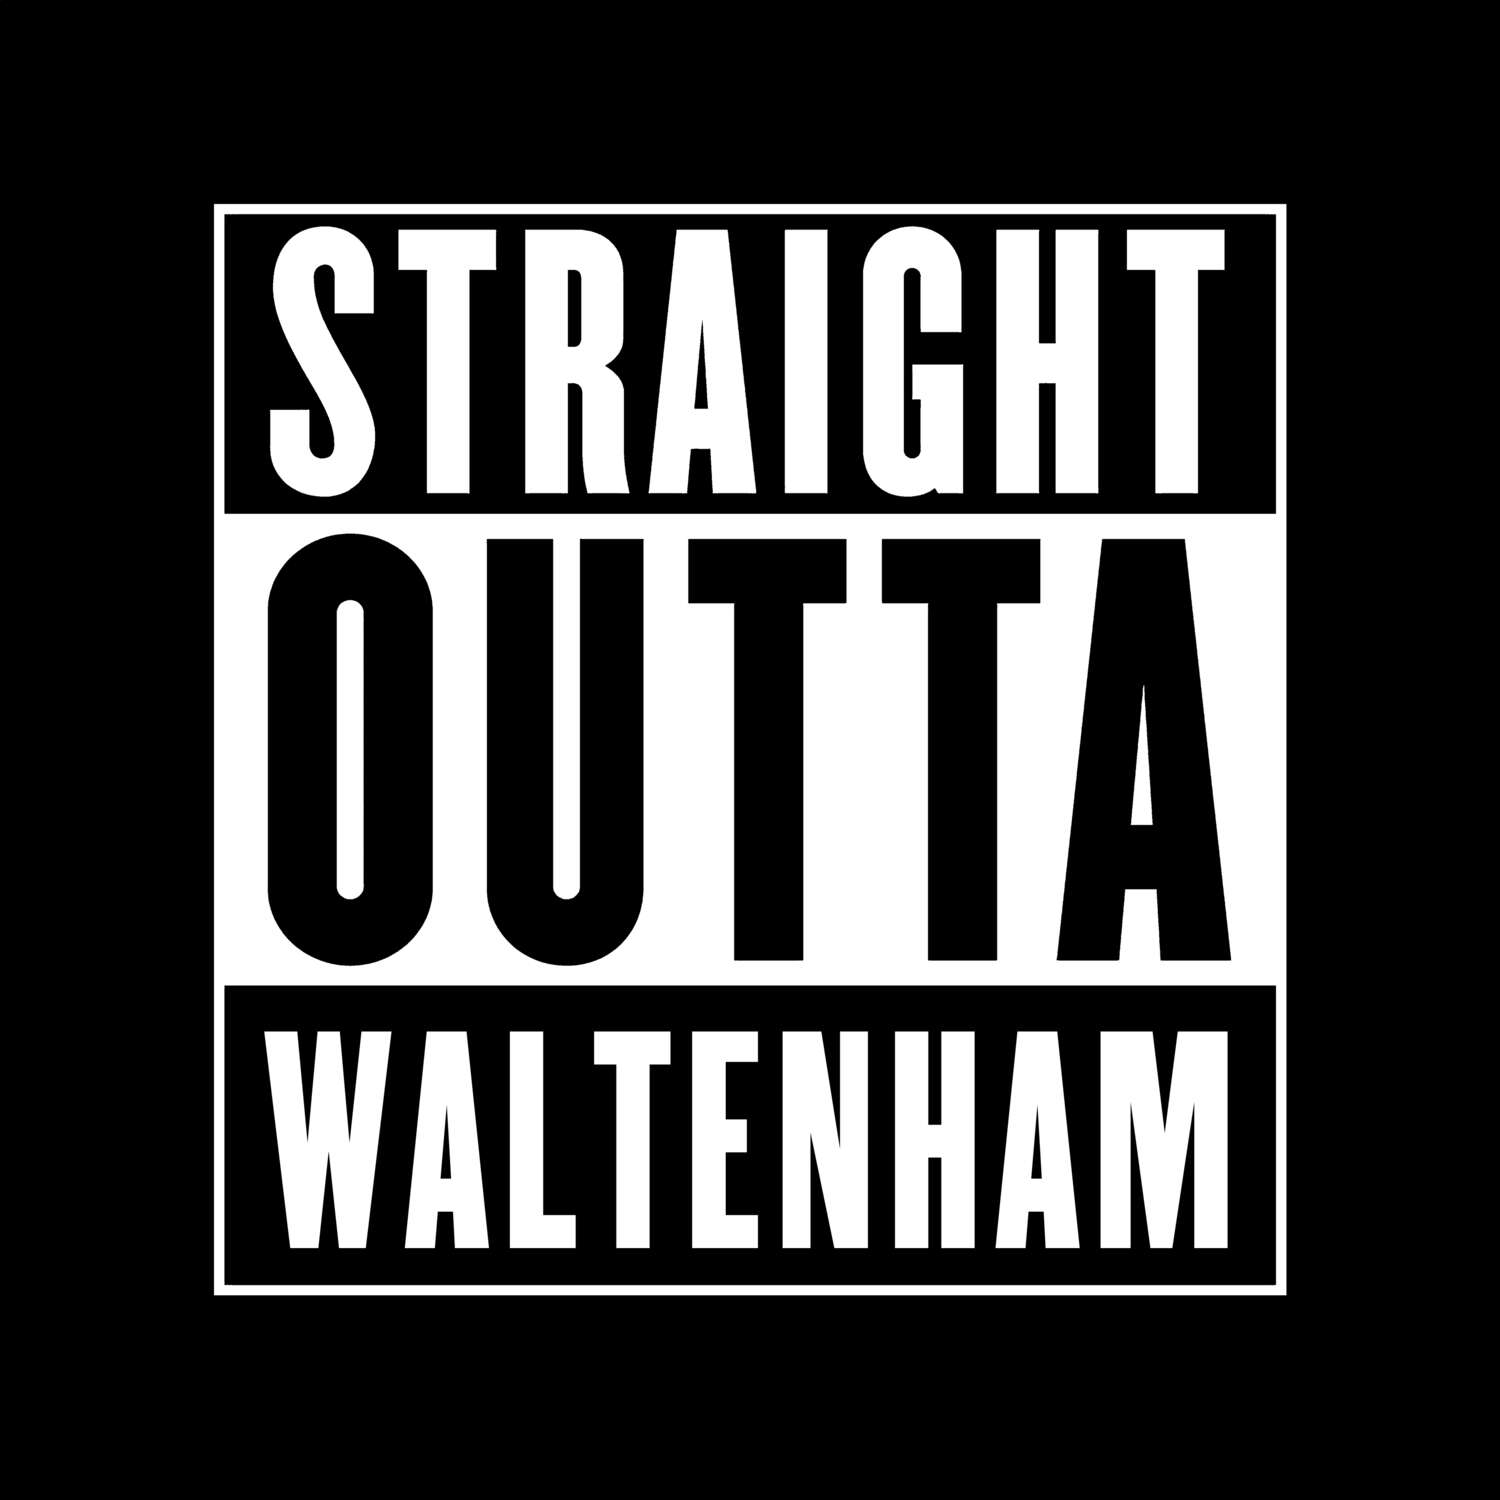 Waltenham T-Shirt »Straight Outta«